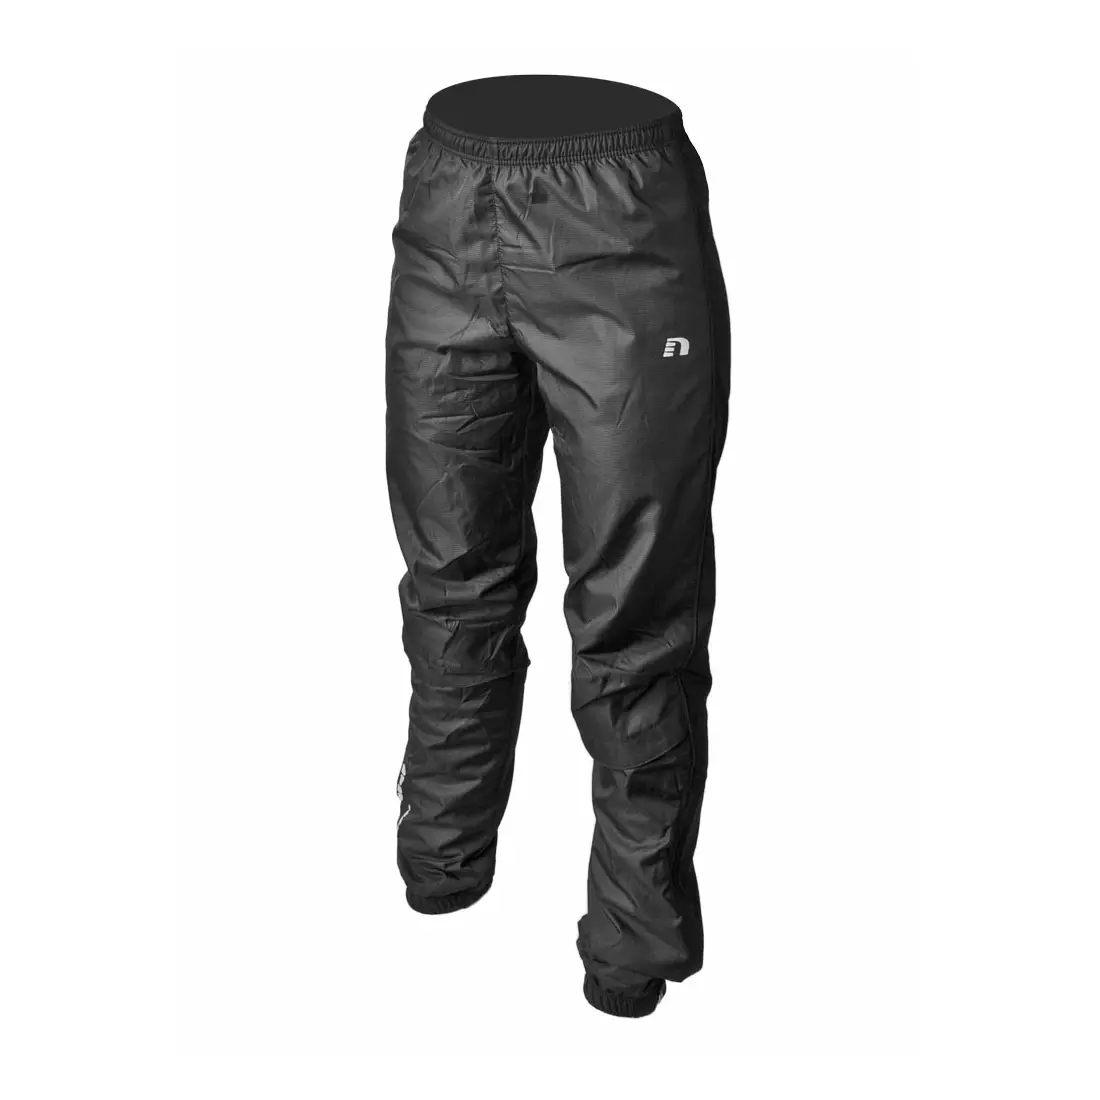 NEWLINE BASE CROSS PANTS - women's insulated running pants 13105-060